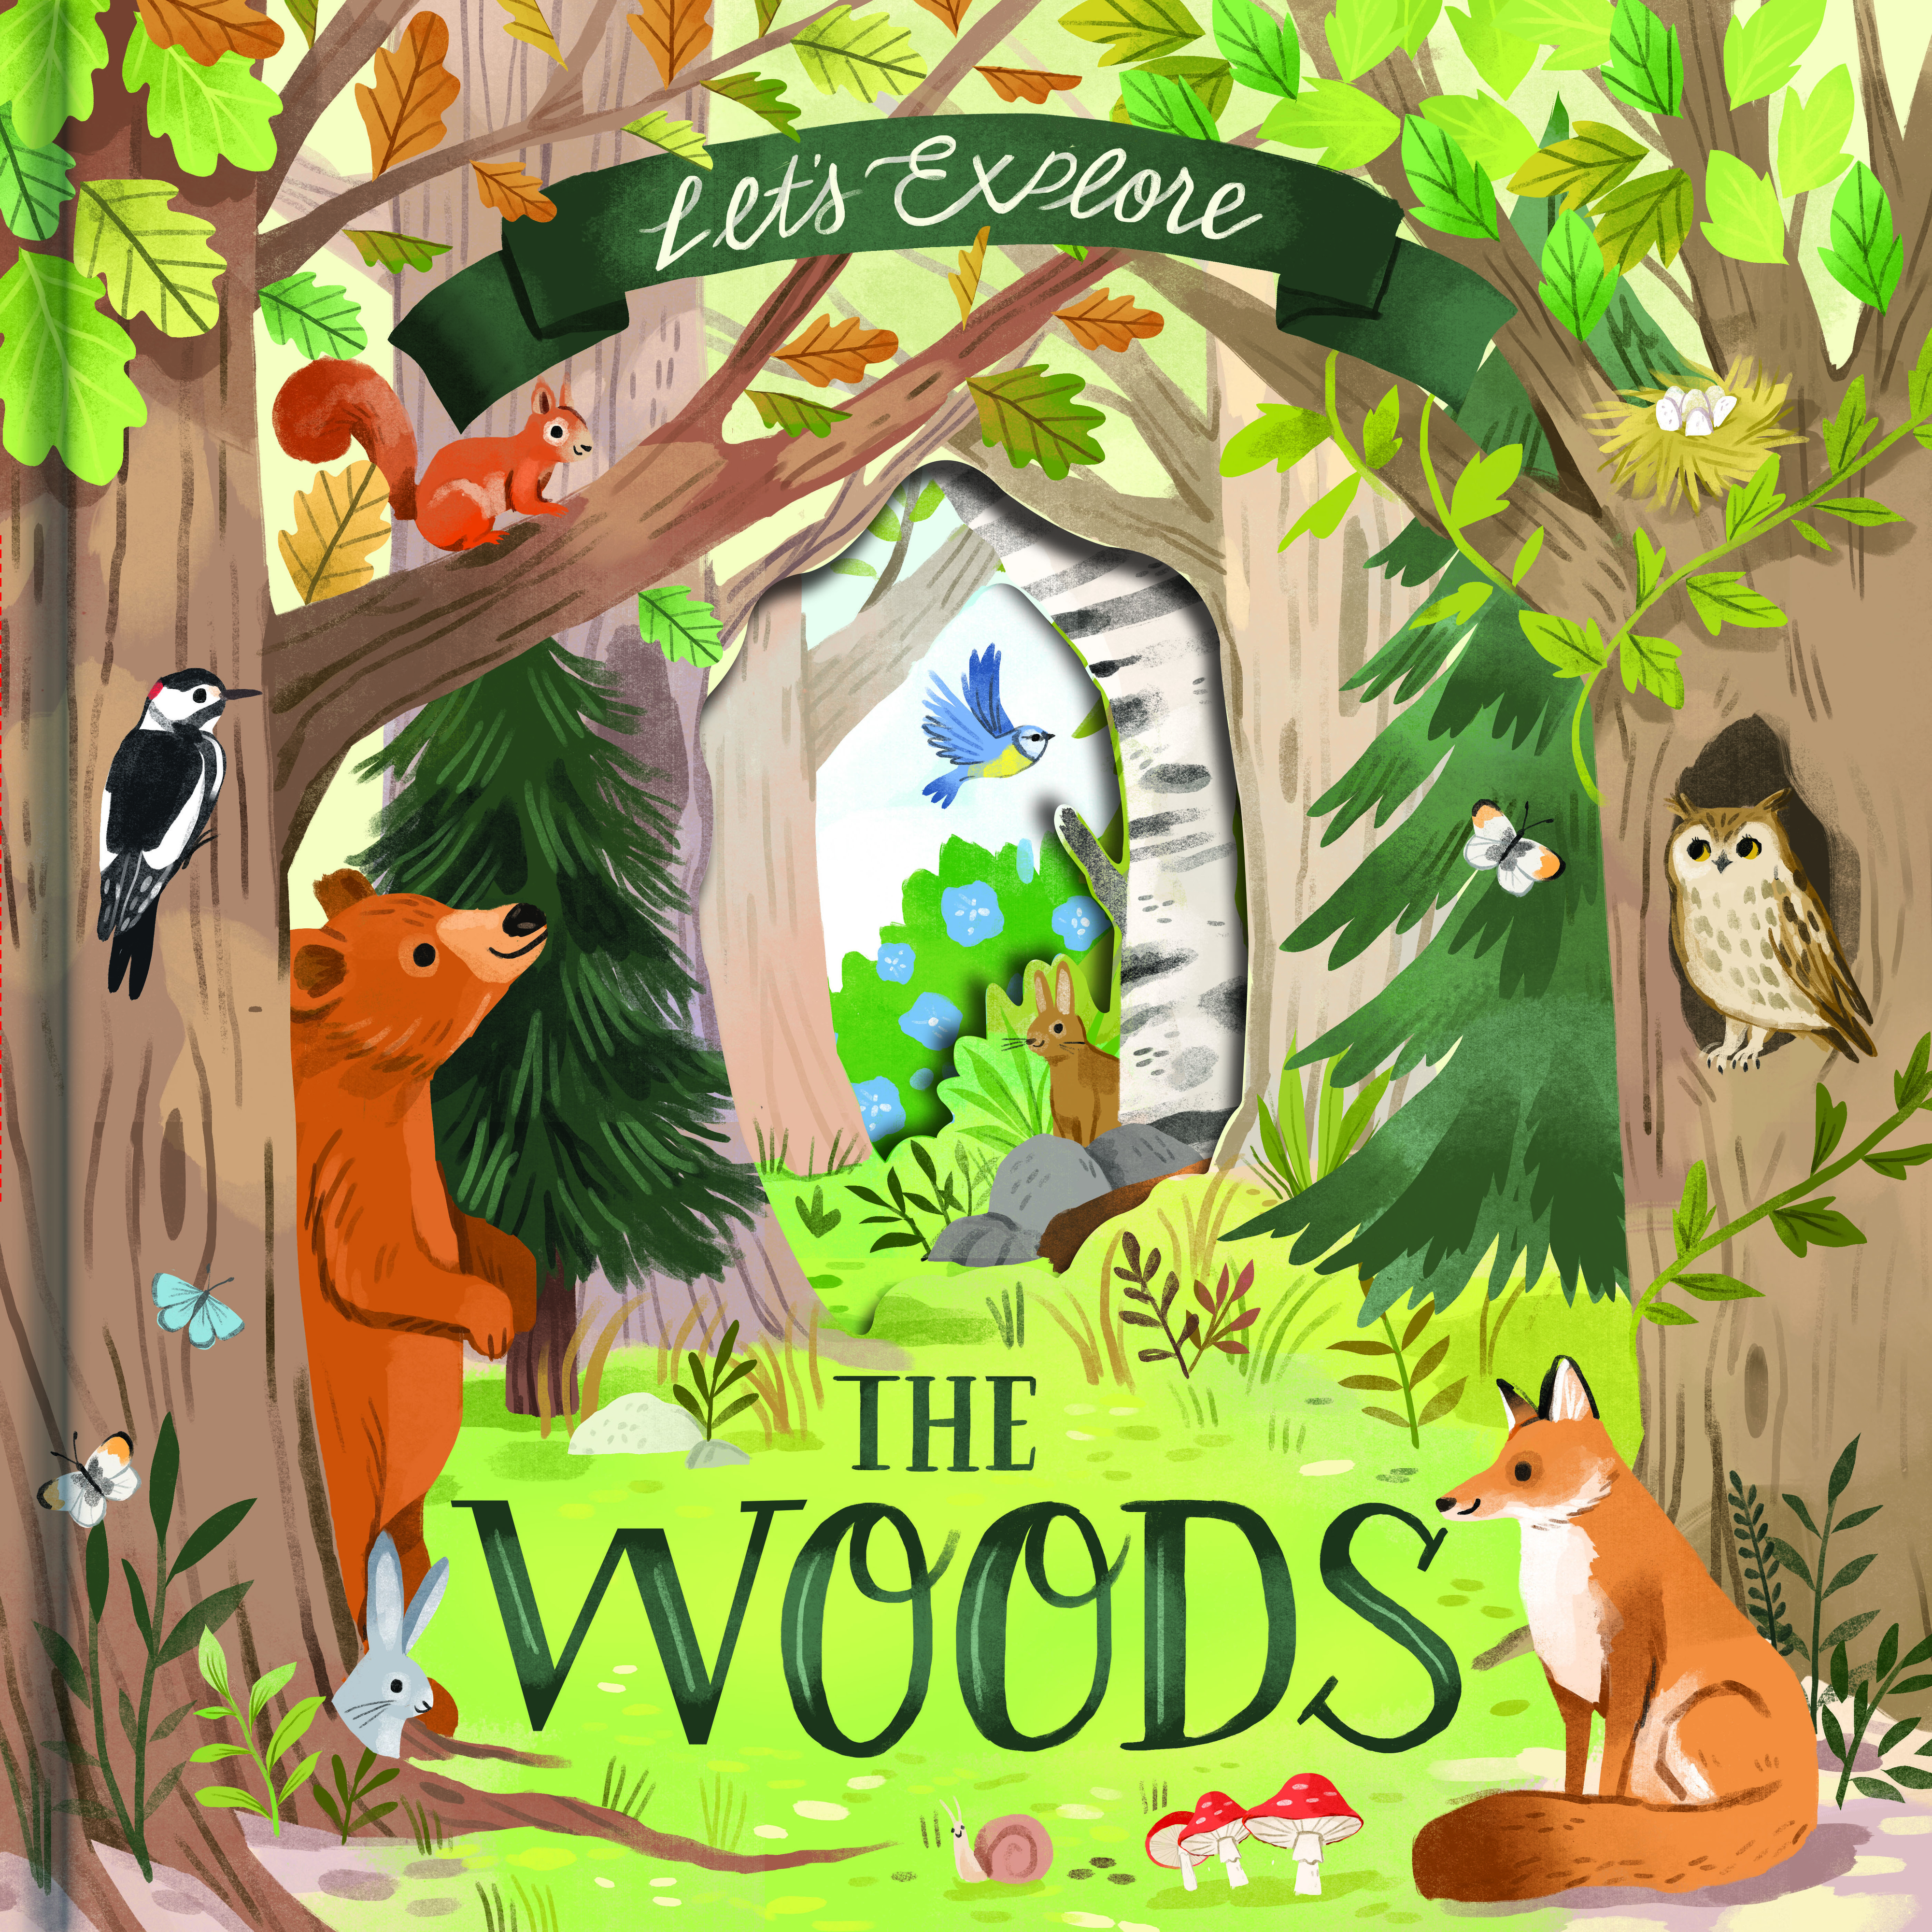 Let's Explore the Woods